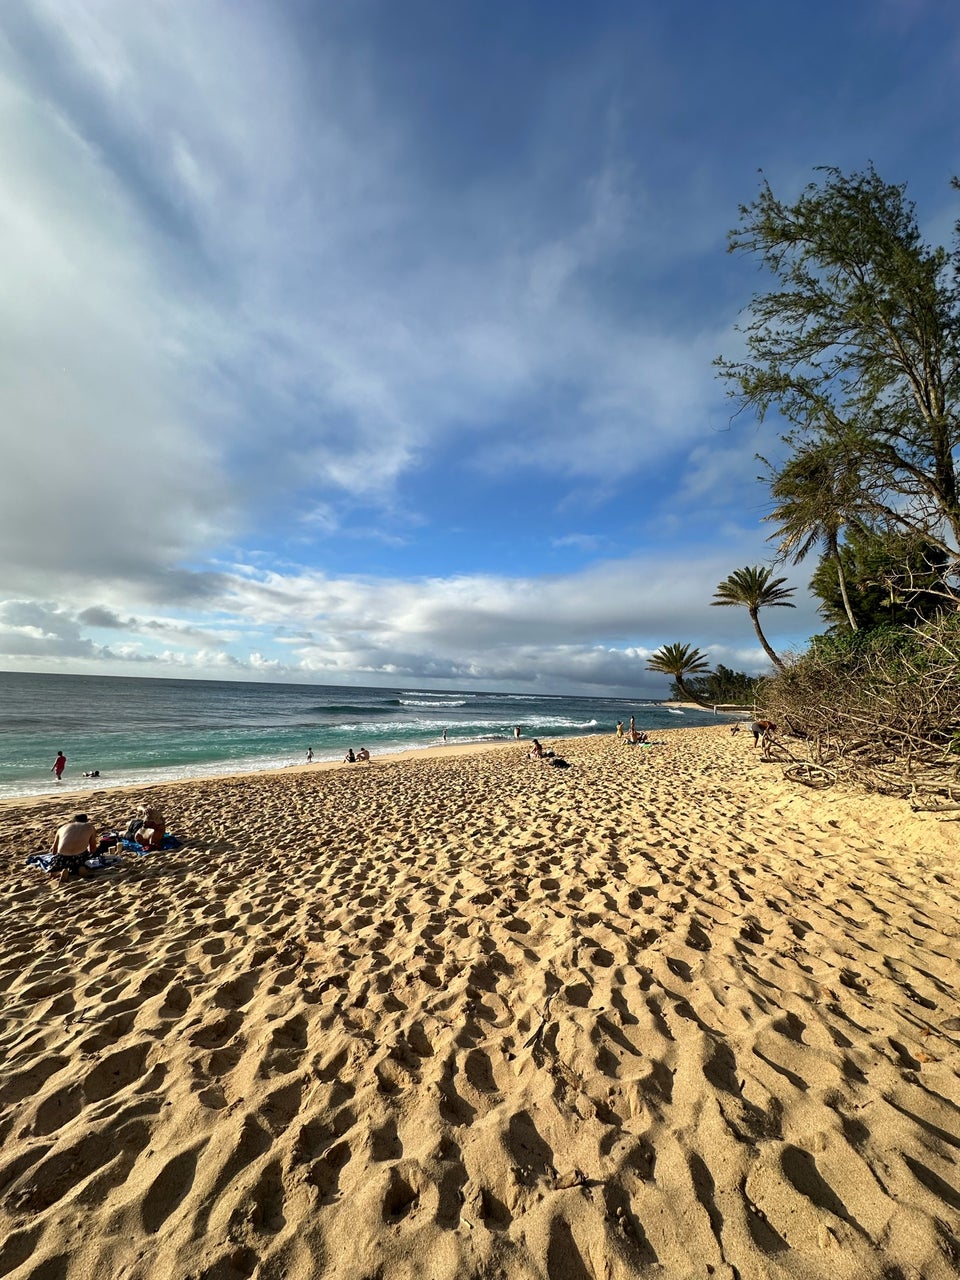 Sunset Beach Pilates 59-063 Hoalua St, Haleiwa Hawaii 96712